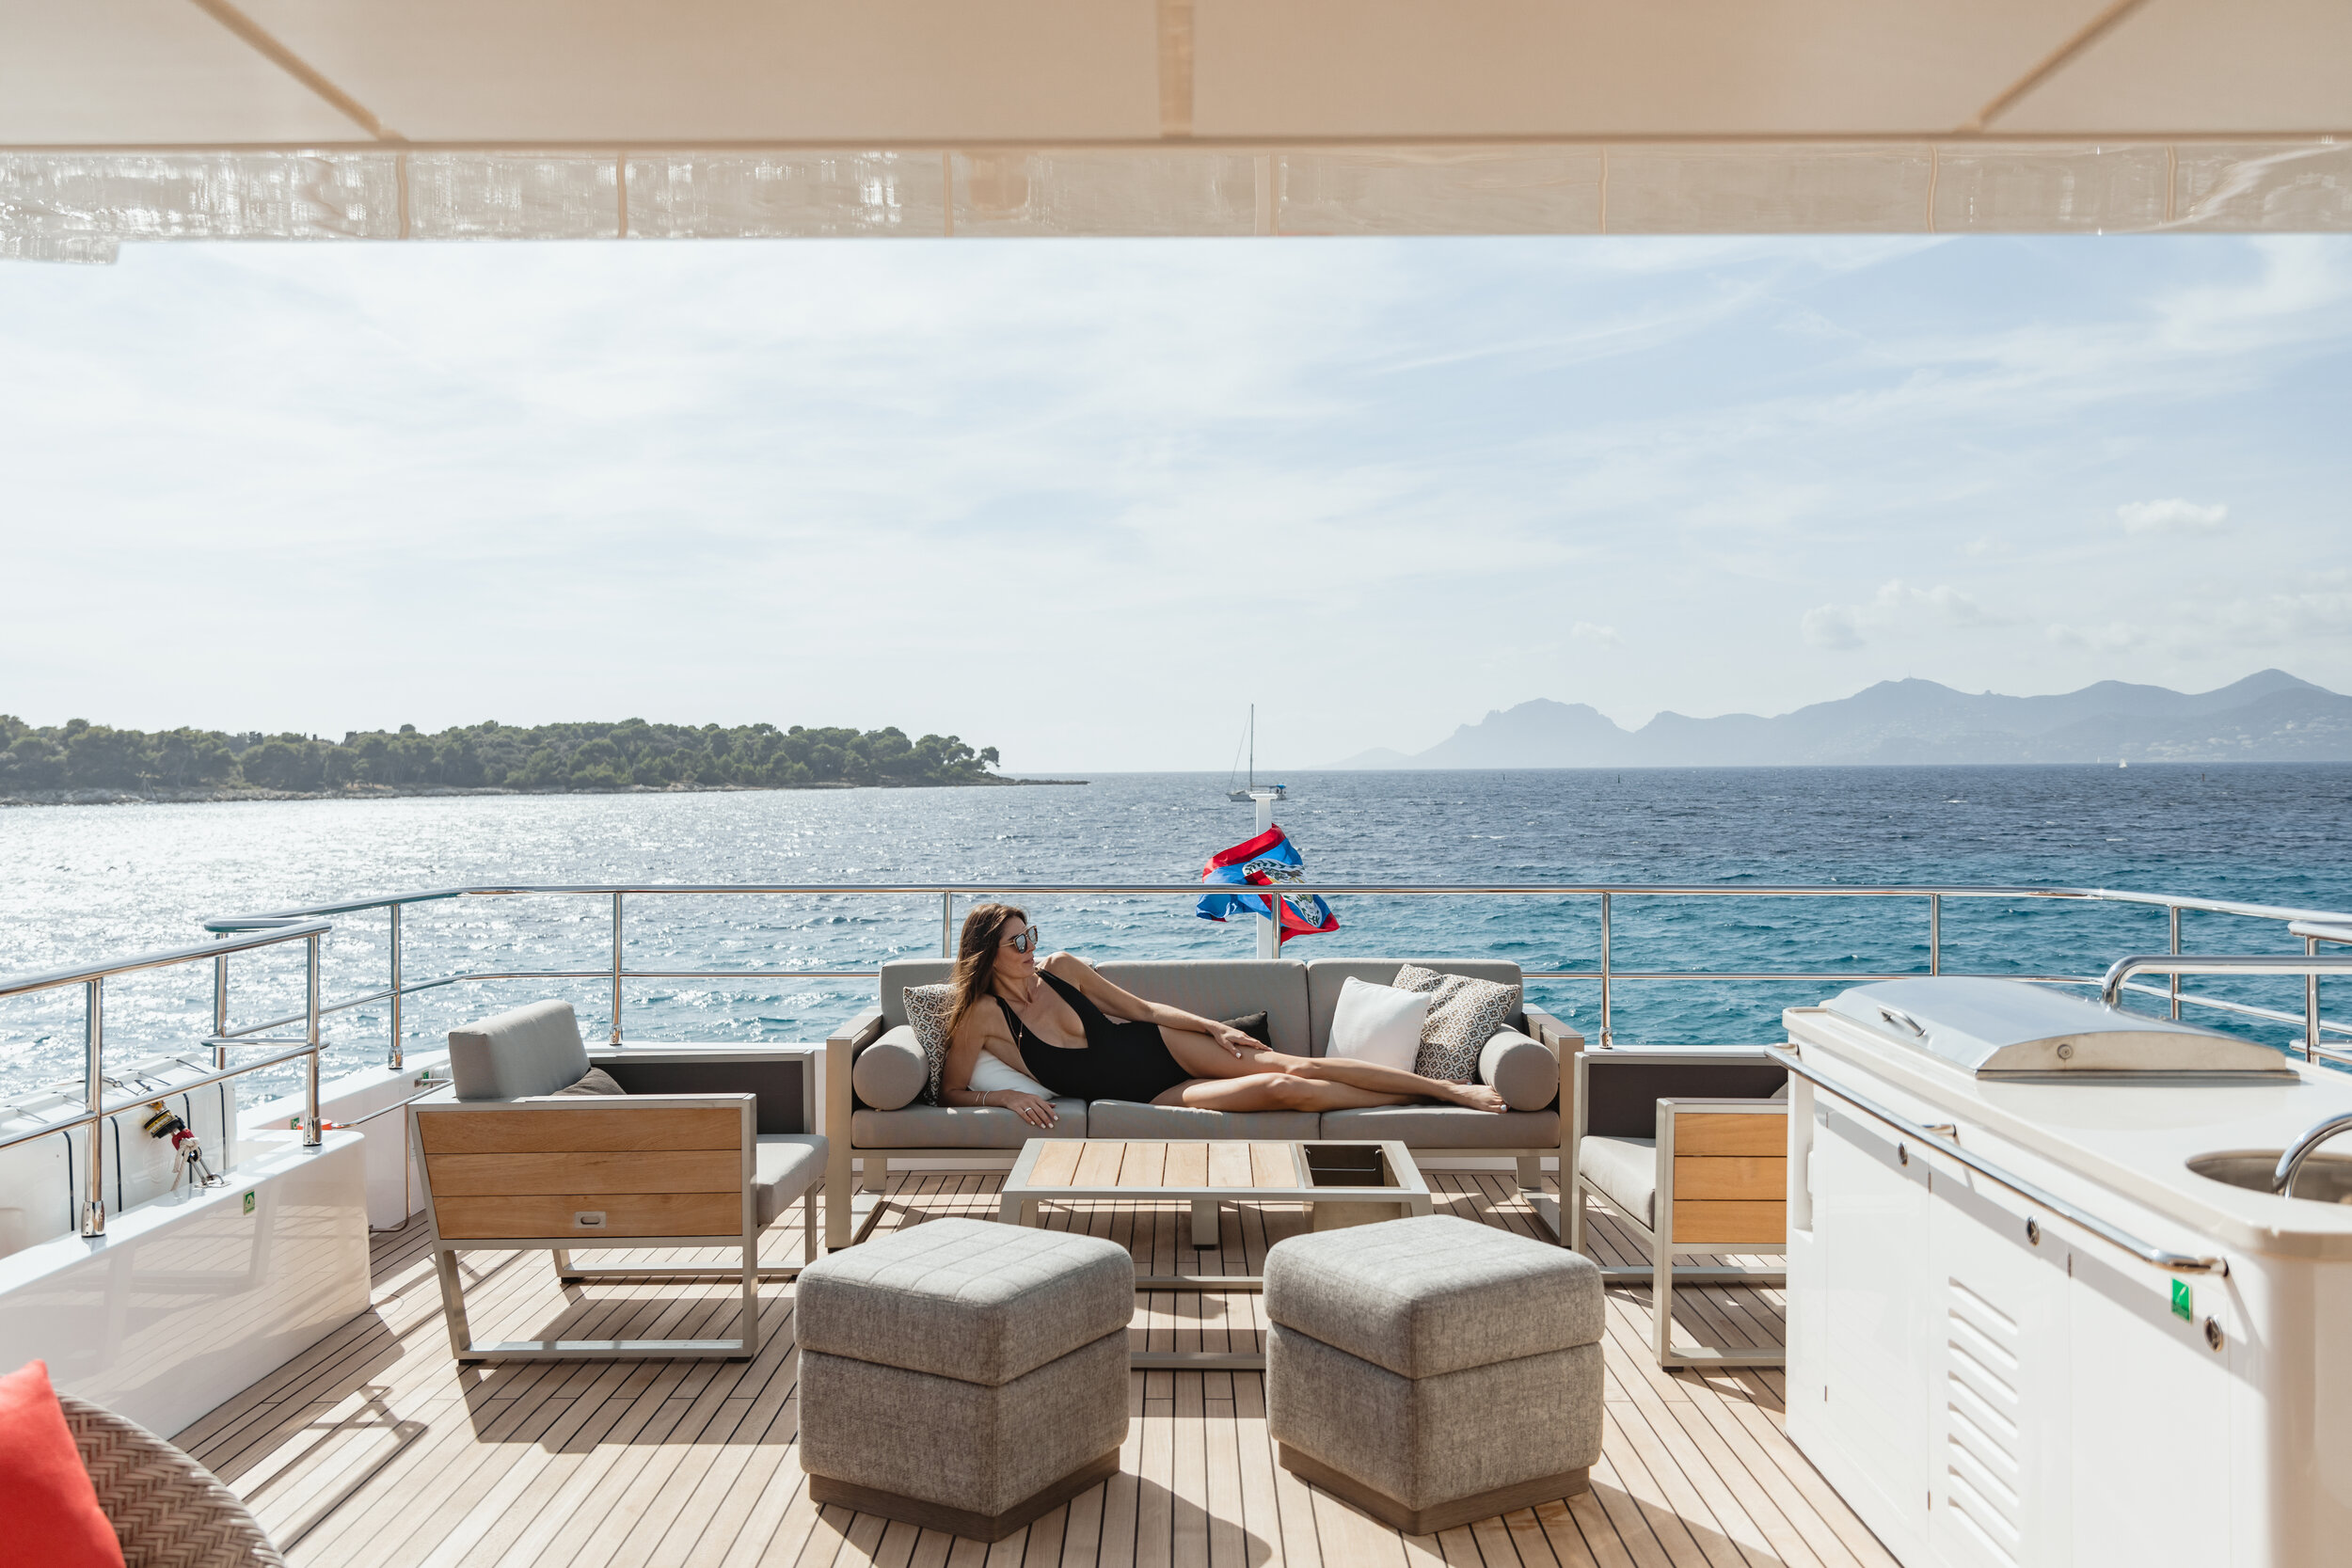 Woman on a luxury majesty 100 yacht in Nice